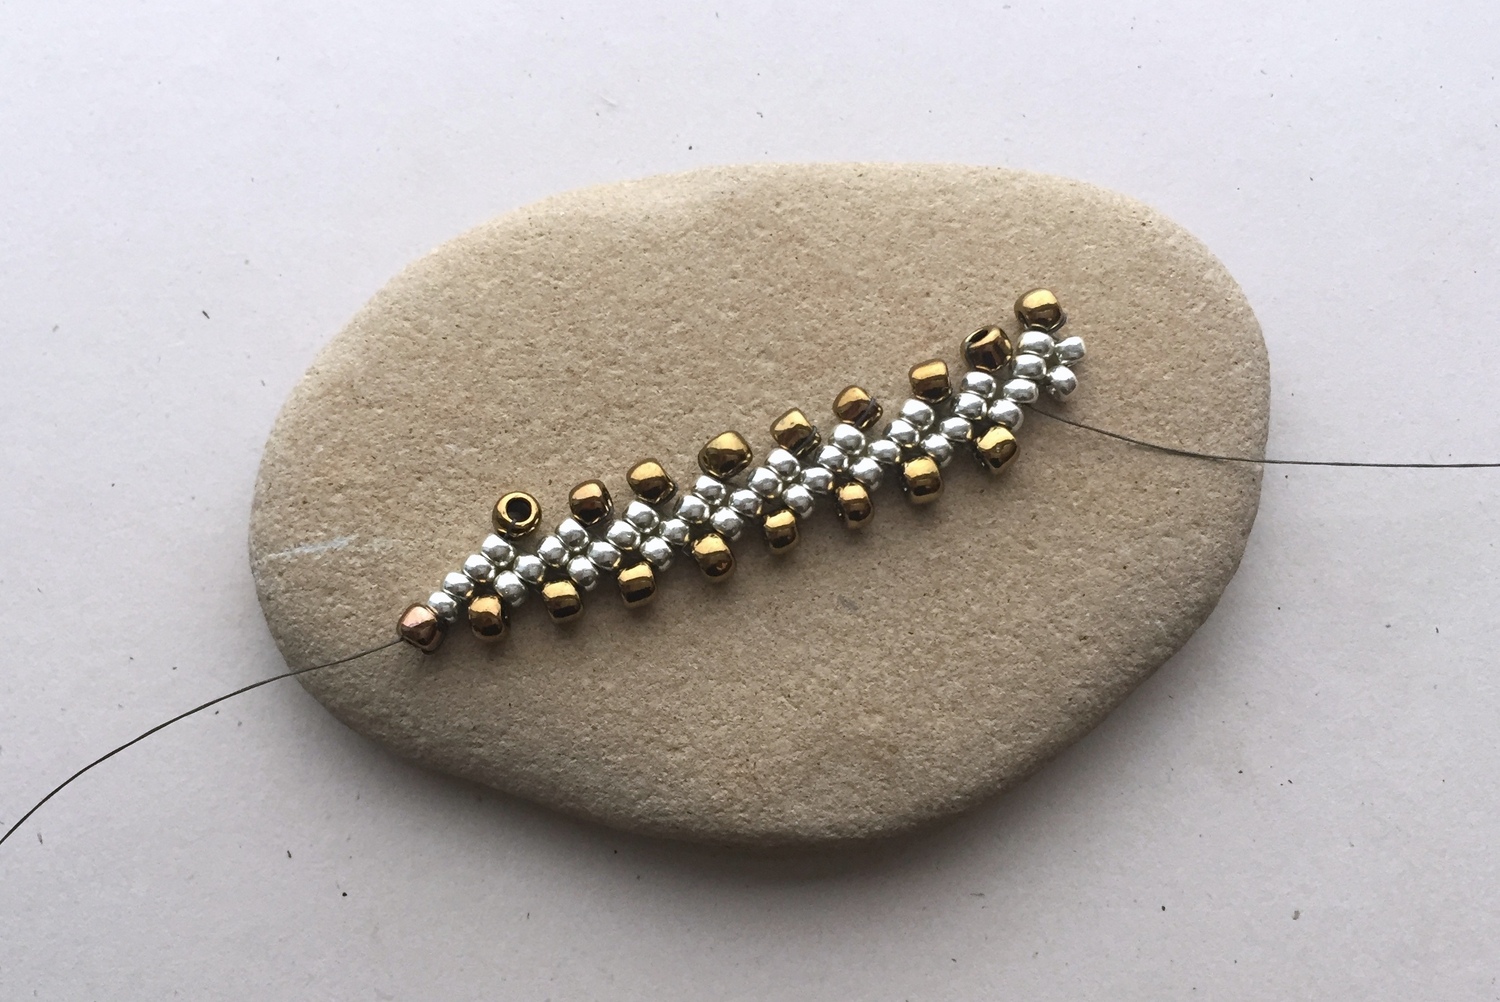 St. Petersburg Stitch Bracelet Beading Kit - Simple Bead Patterns